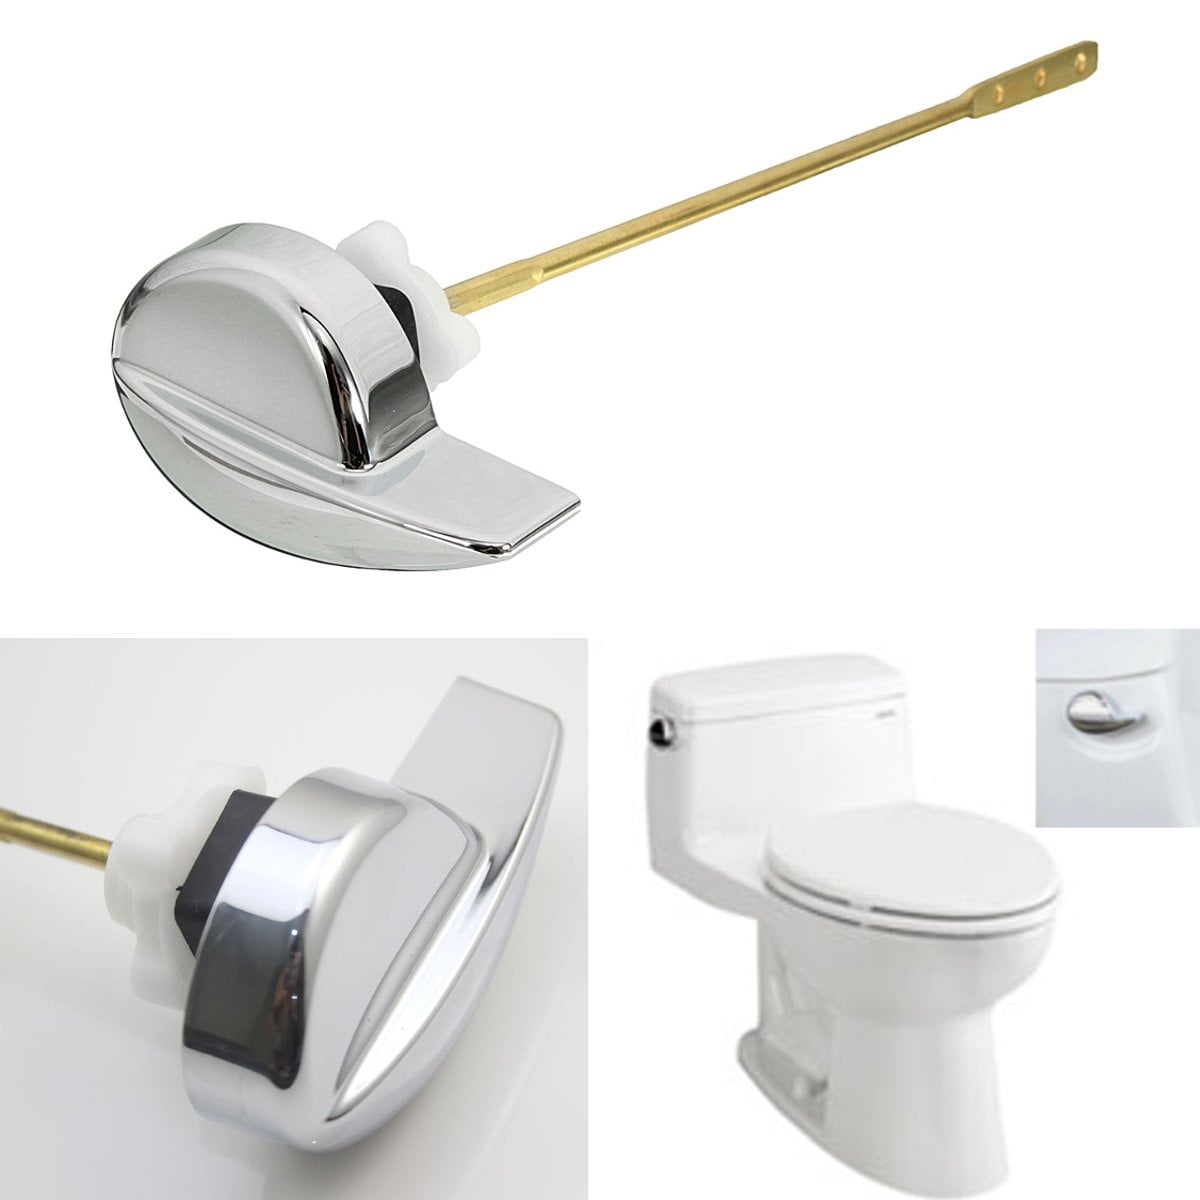 Easy Use Side Mount Toilet Flush Lever Handle Angle For TOTO Kohler Toilet Tank 